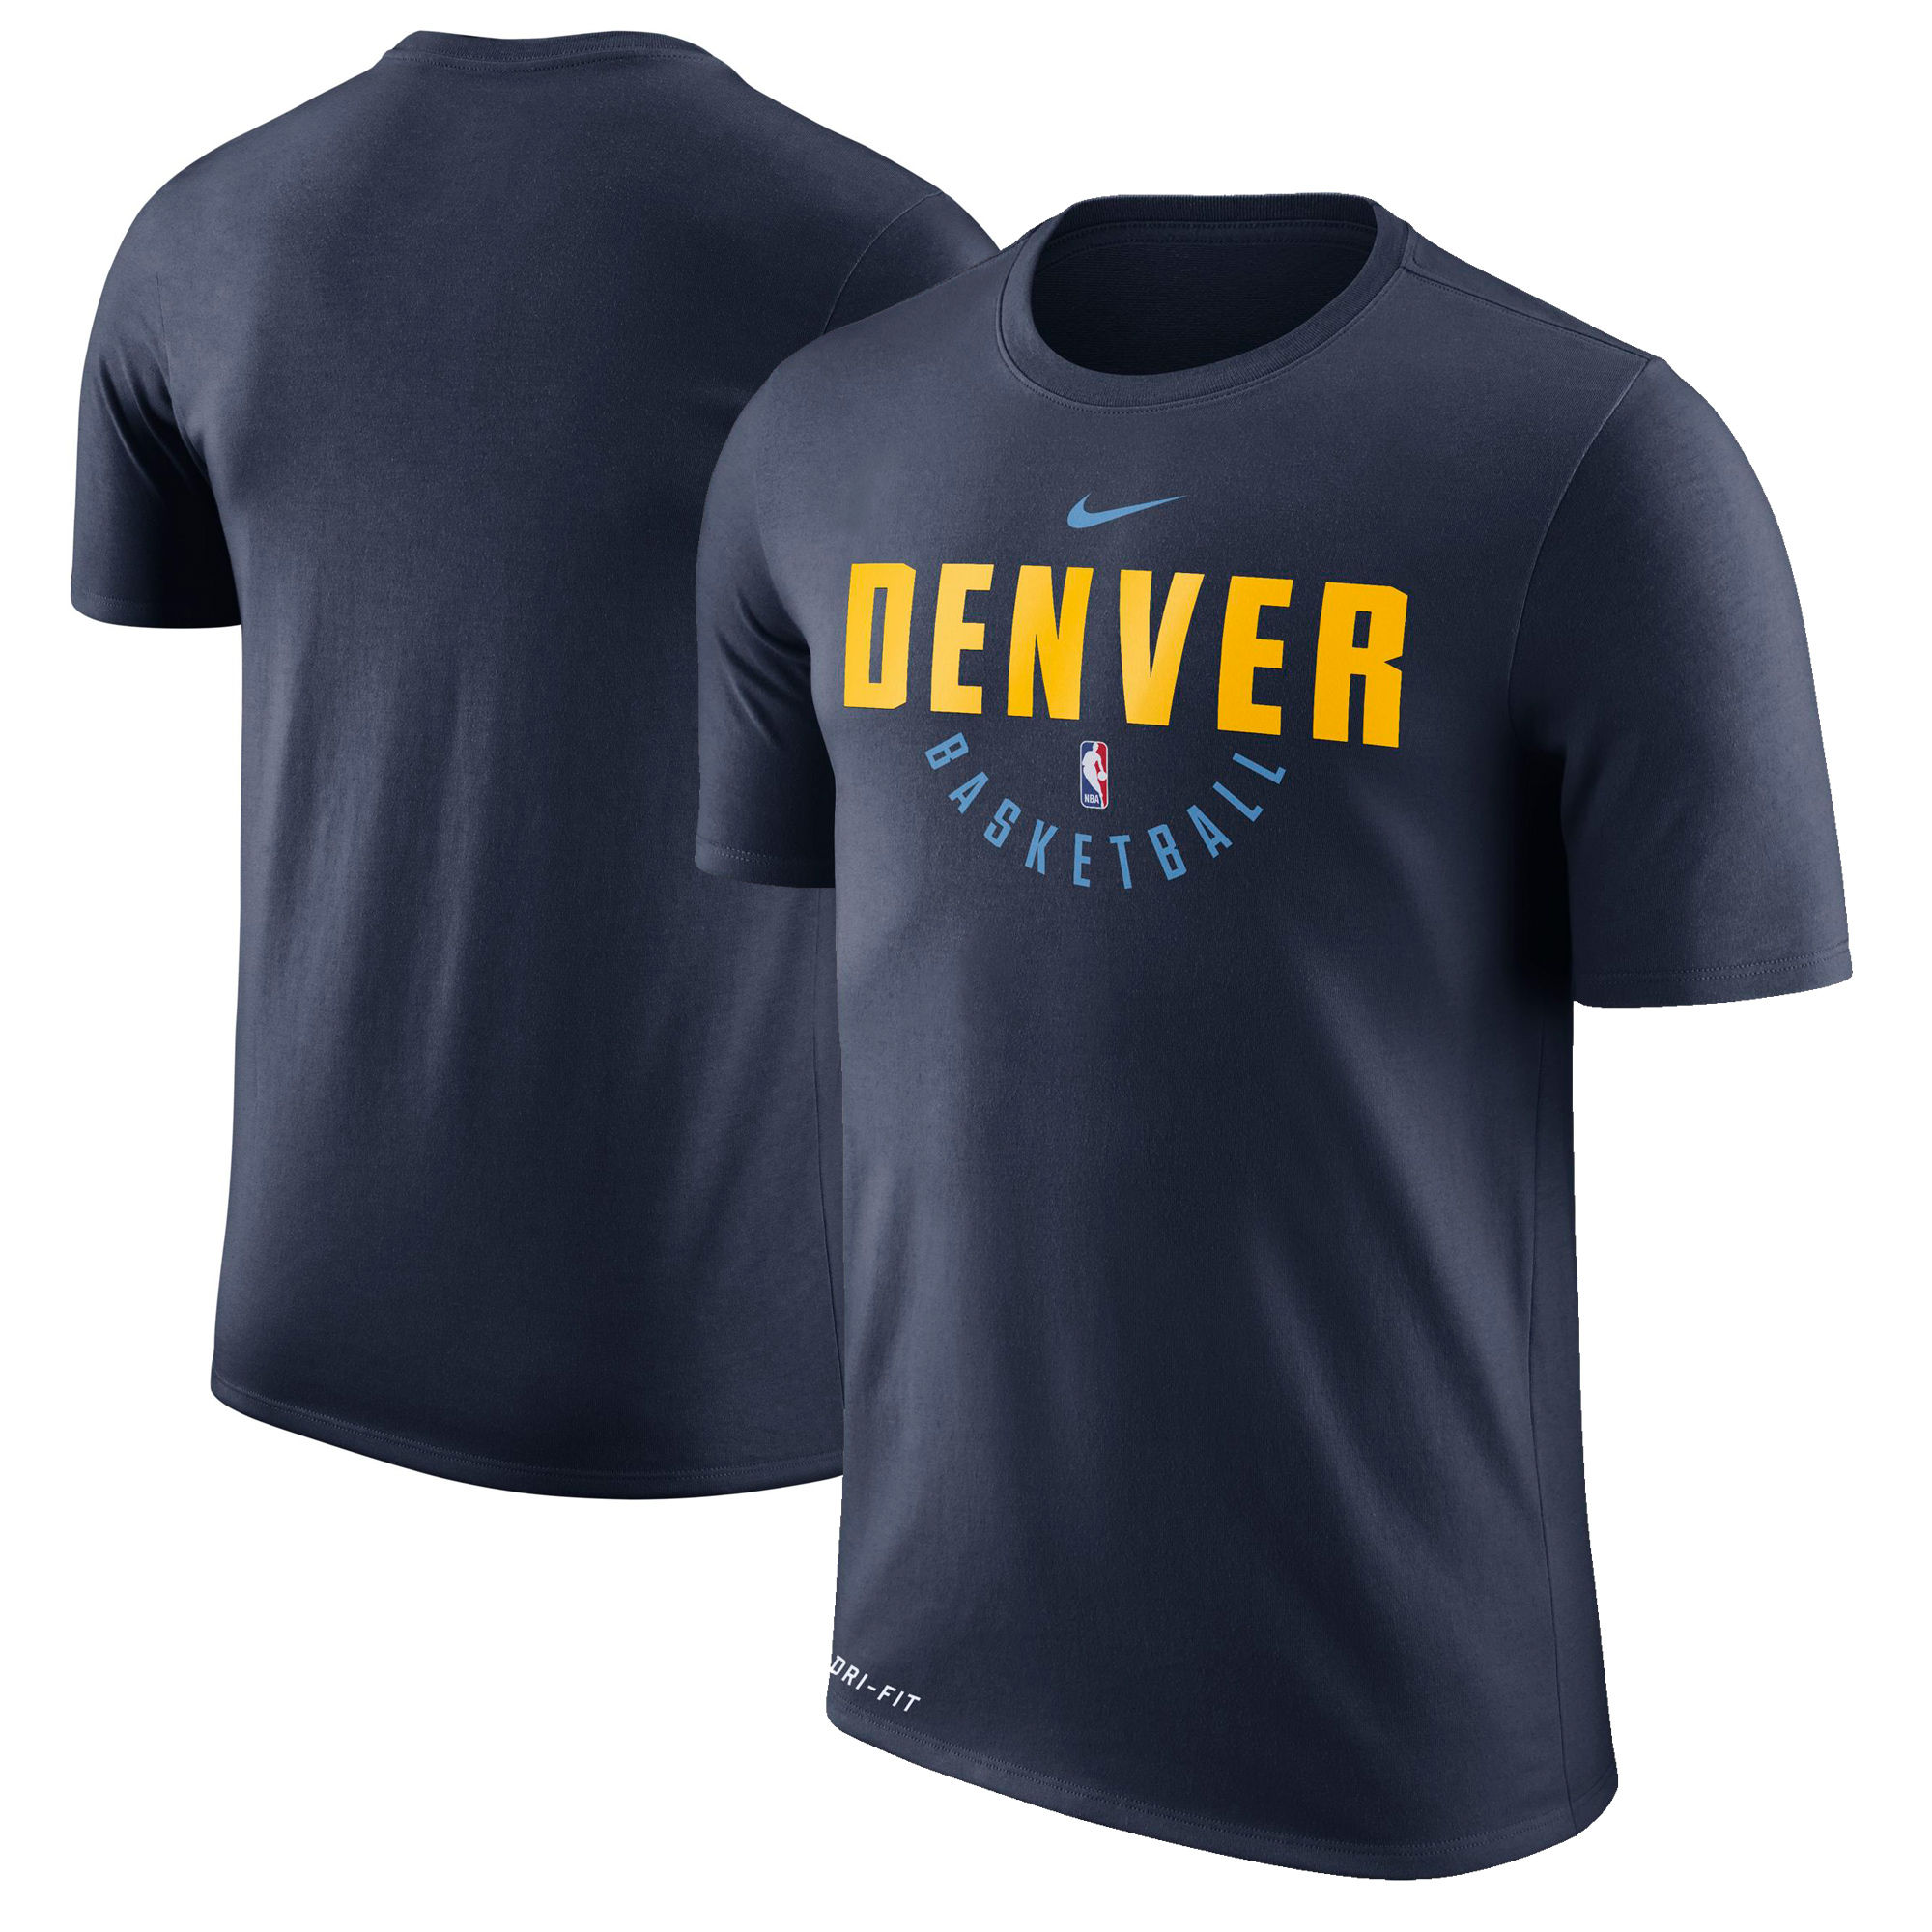 Denver Nuggets Navy Nike Practice Performance T-Shirt